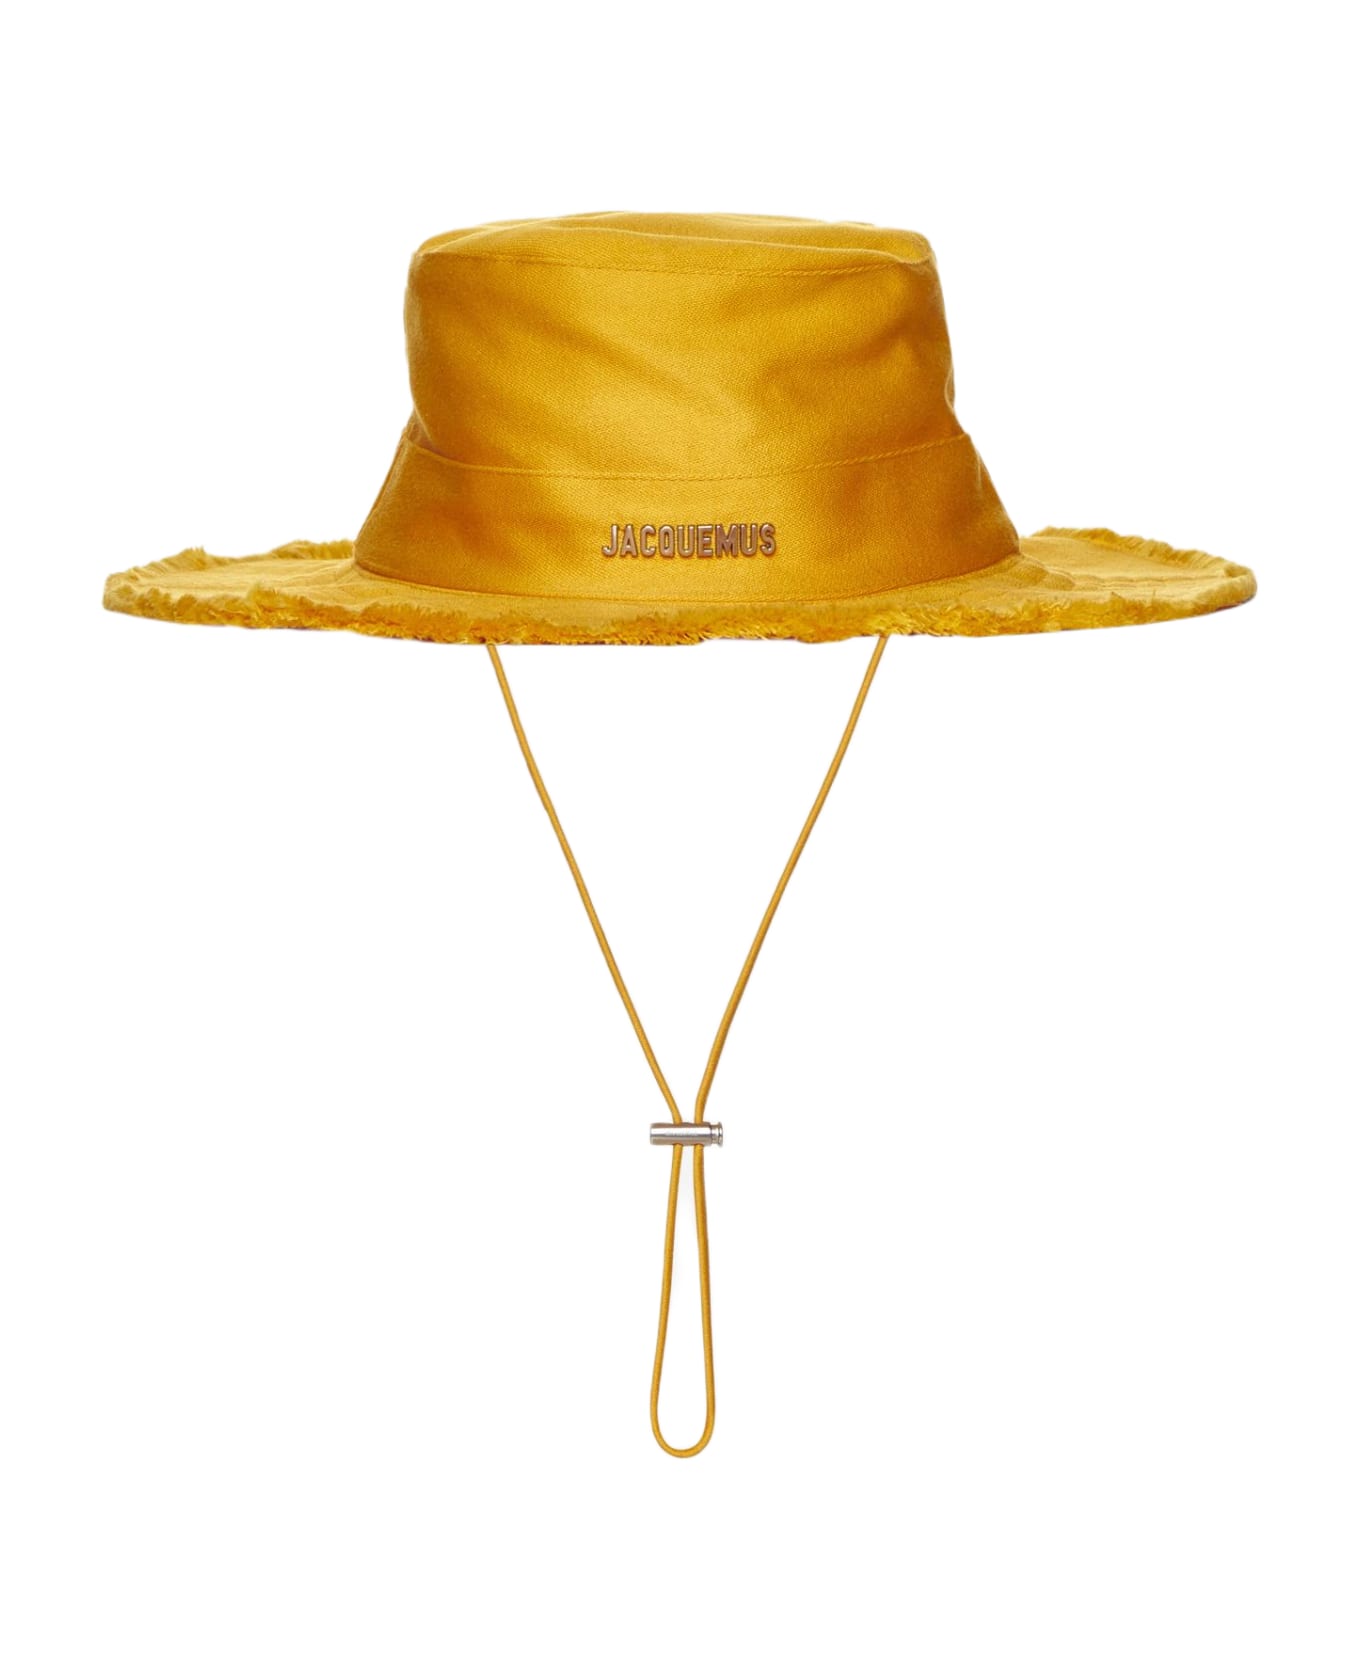 Jacquemus Le Bob Artichaut Frayed Expedition Hat - Dark orange 帽子